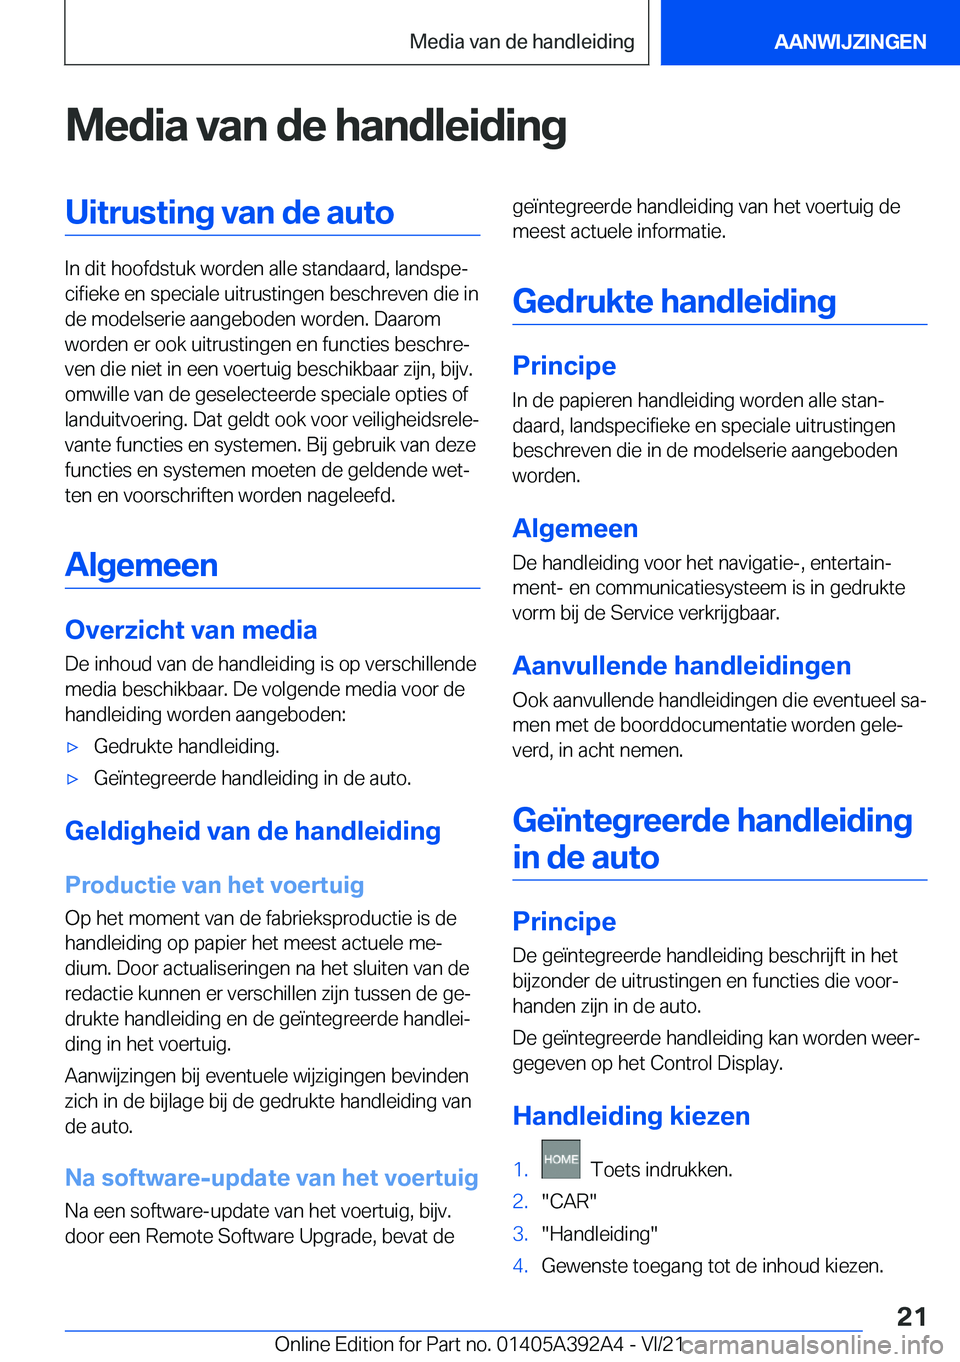 BMW 4 SERIES 2022  Instructieboekjes (in Dutch) �M�e�d�i�a��v�a�n��d�e��h�a�n�d�l�e�i�d�i�n�g�U�i�t�r�u�s�t�i�n�g��v�a�n��d�e��a�u�t�o
�I�n��d�i�t��h�o�o�f�d�s�t�u�k��w�o�r�d�e�n��a�l�l�e��s�t�a�n�d�a�a�r�d�,��l�a�n�d�s�p�ej�c�i�f�i�e�